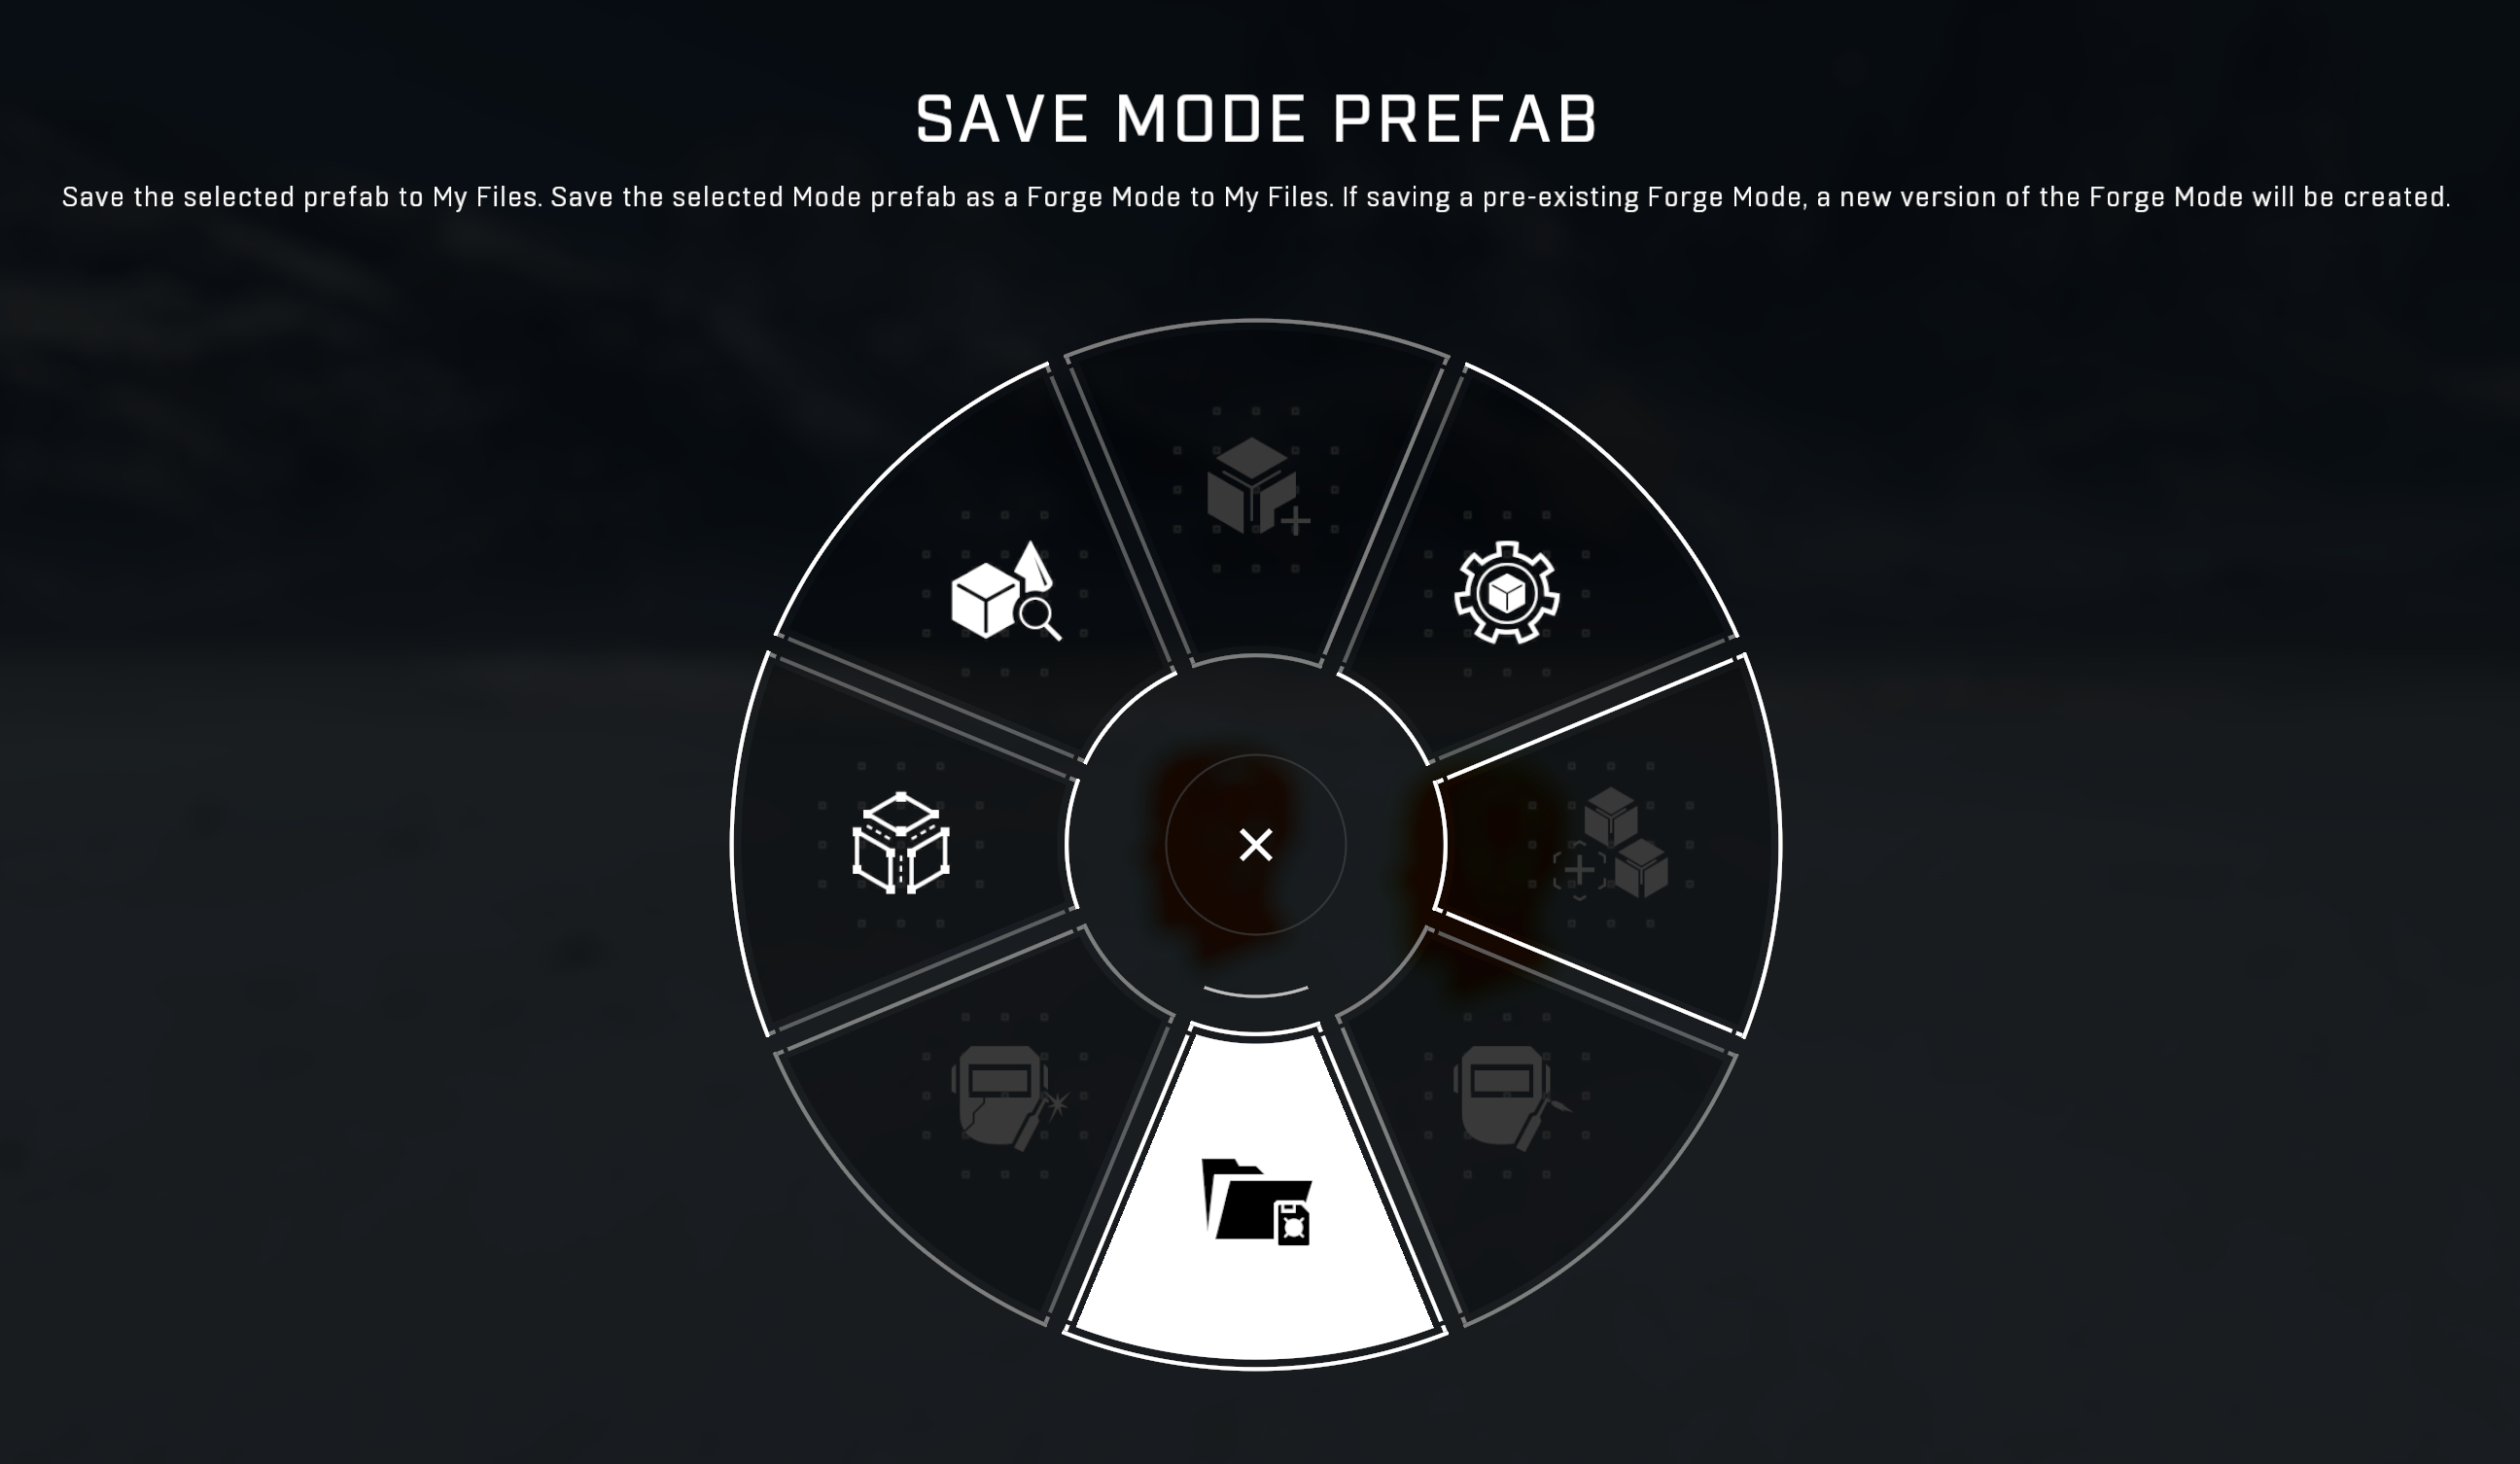 Halo Infinite screenshot of saving a Mode Prefab in the Action Menu